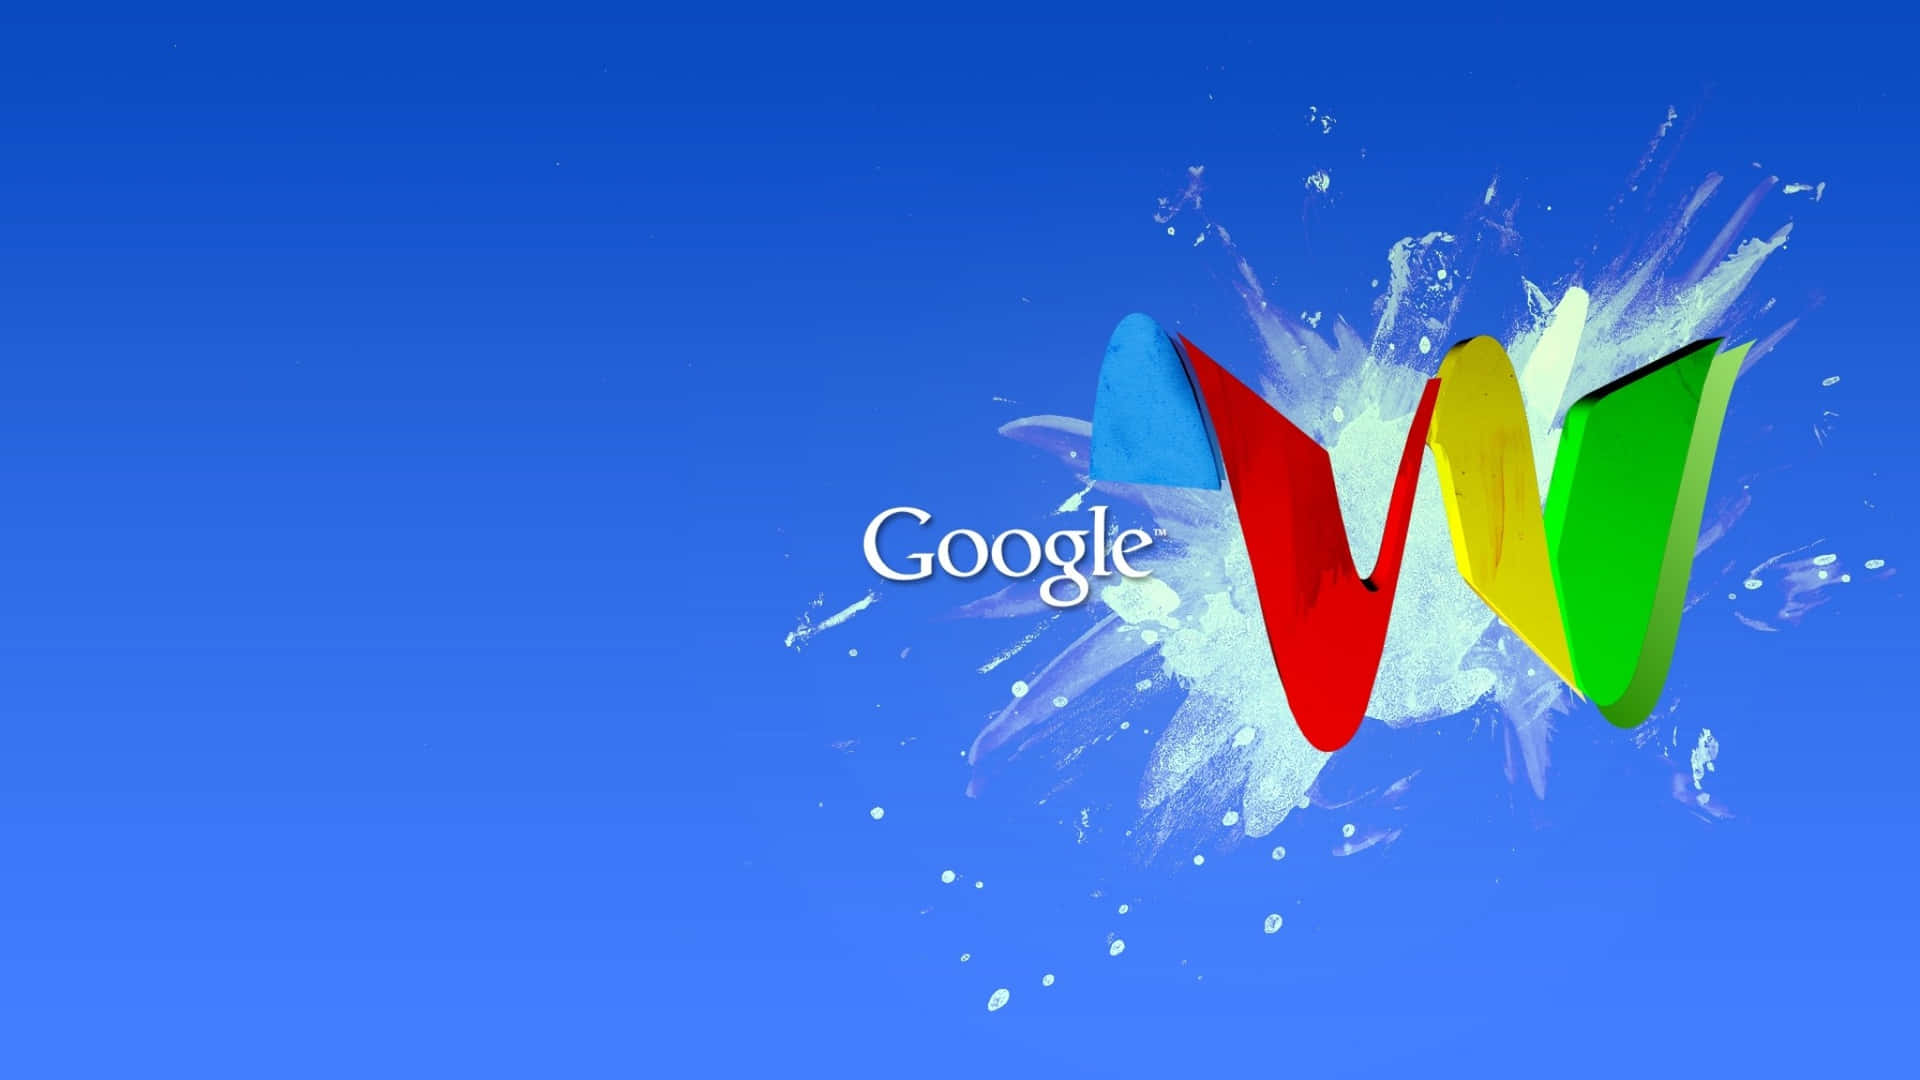 Google Logo On A Blue Background Wallpaper